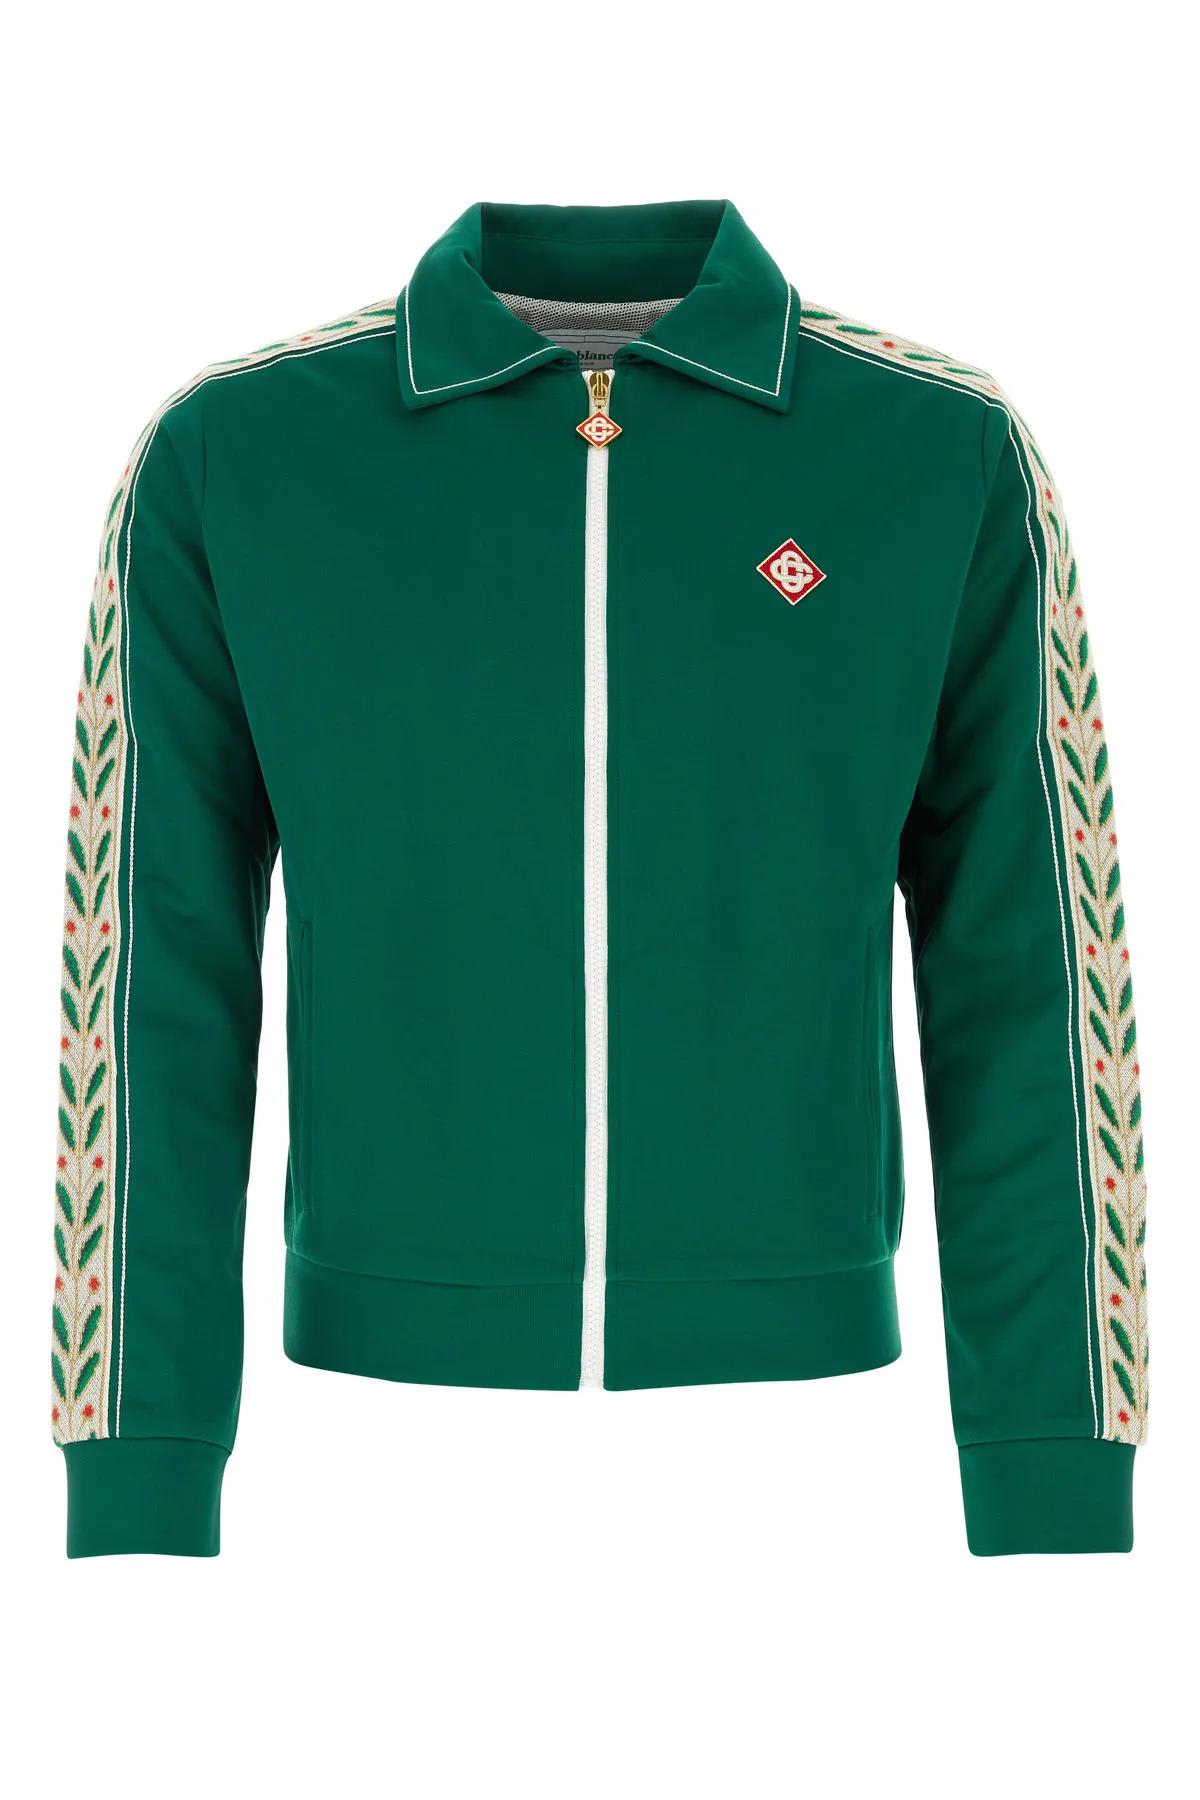 Shop Casablanca Emerald Green Polyester Blend Sweatshirt